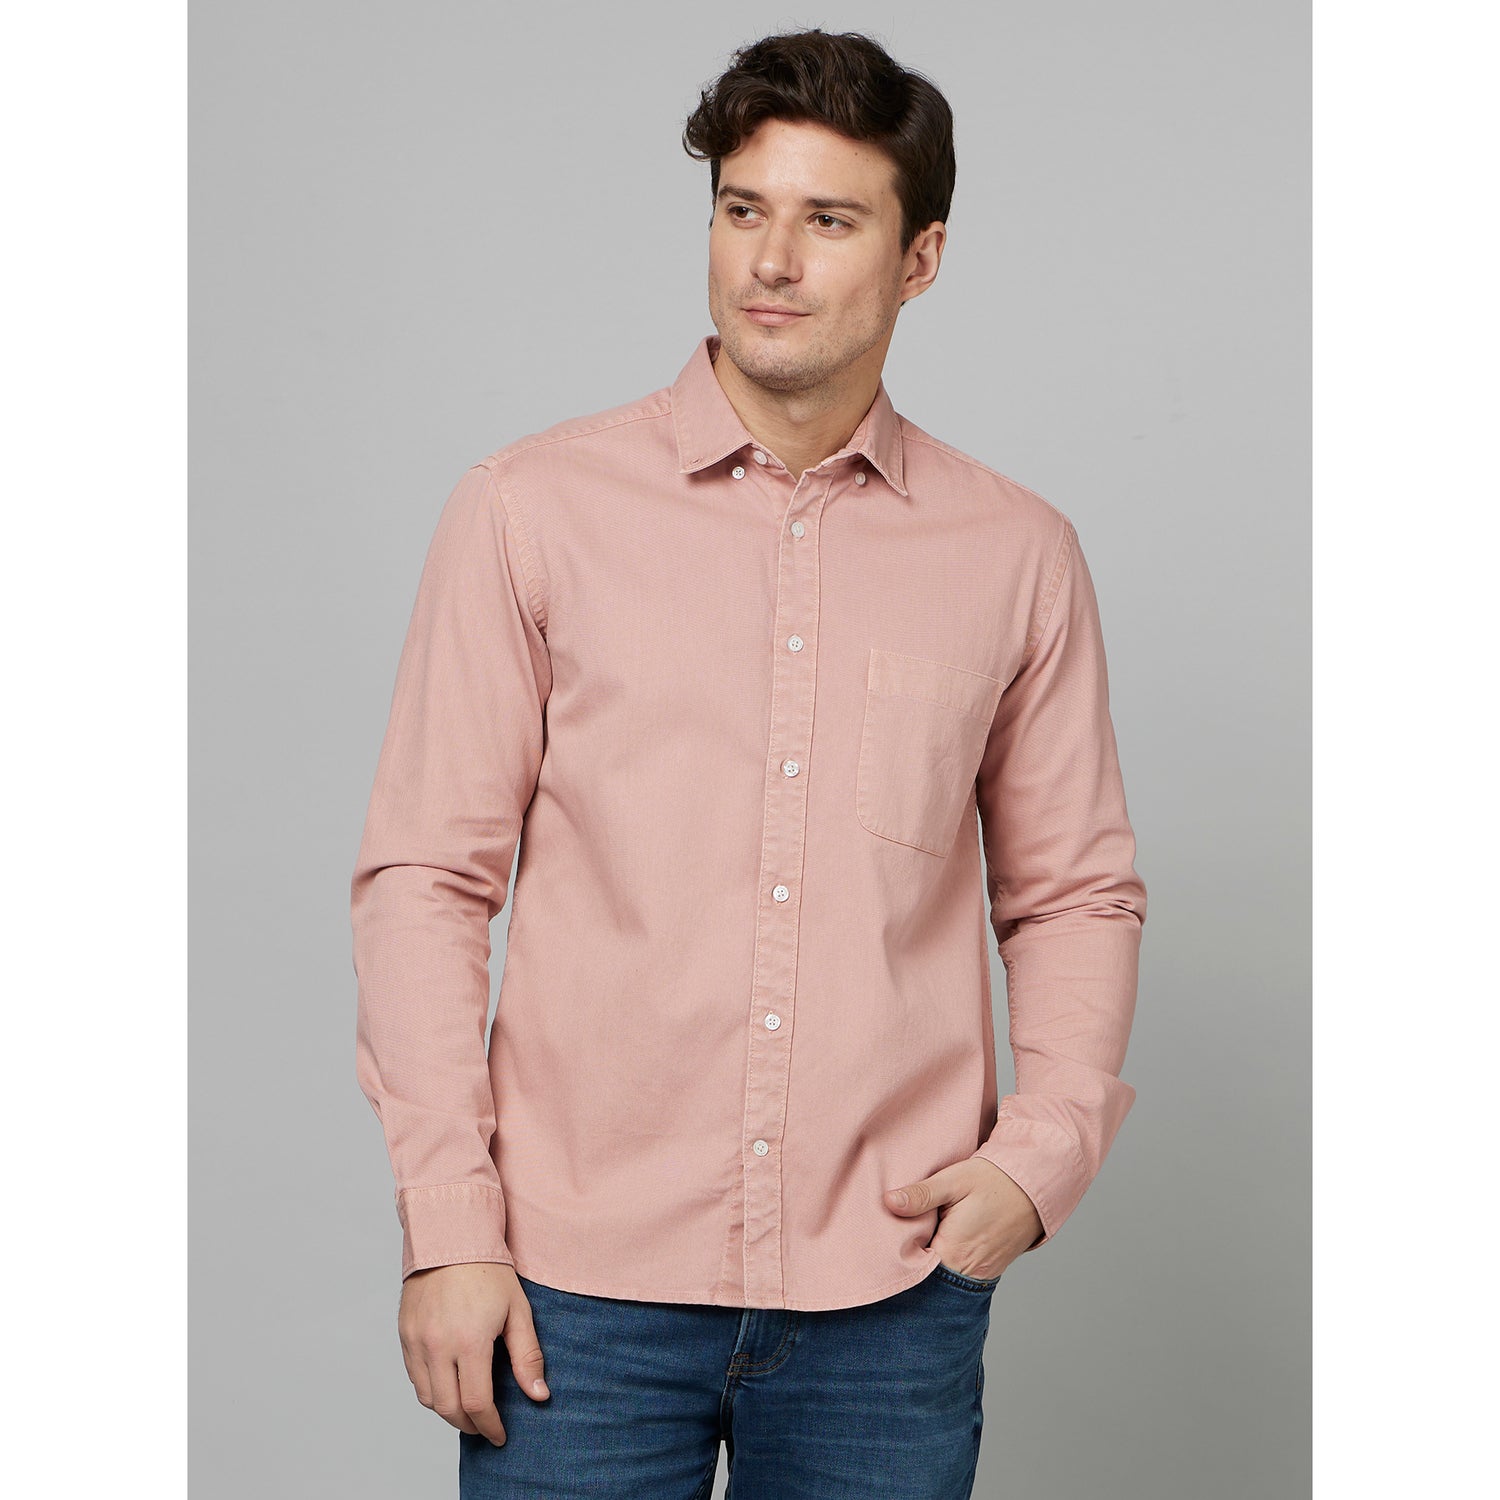 Pink Classic Button Down Collar Cotton Casual Shirt (FAZAROD)